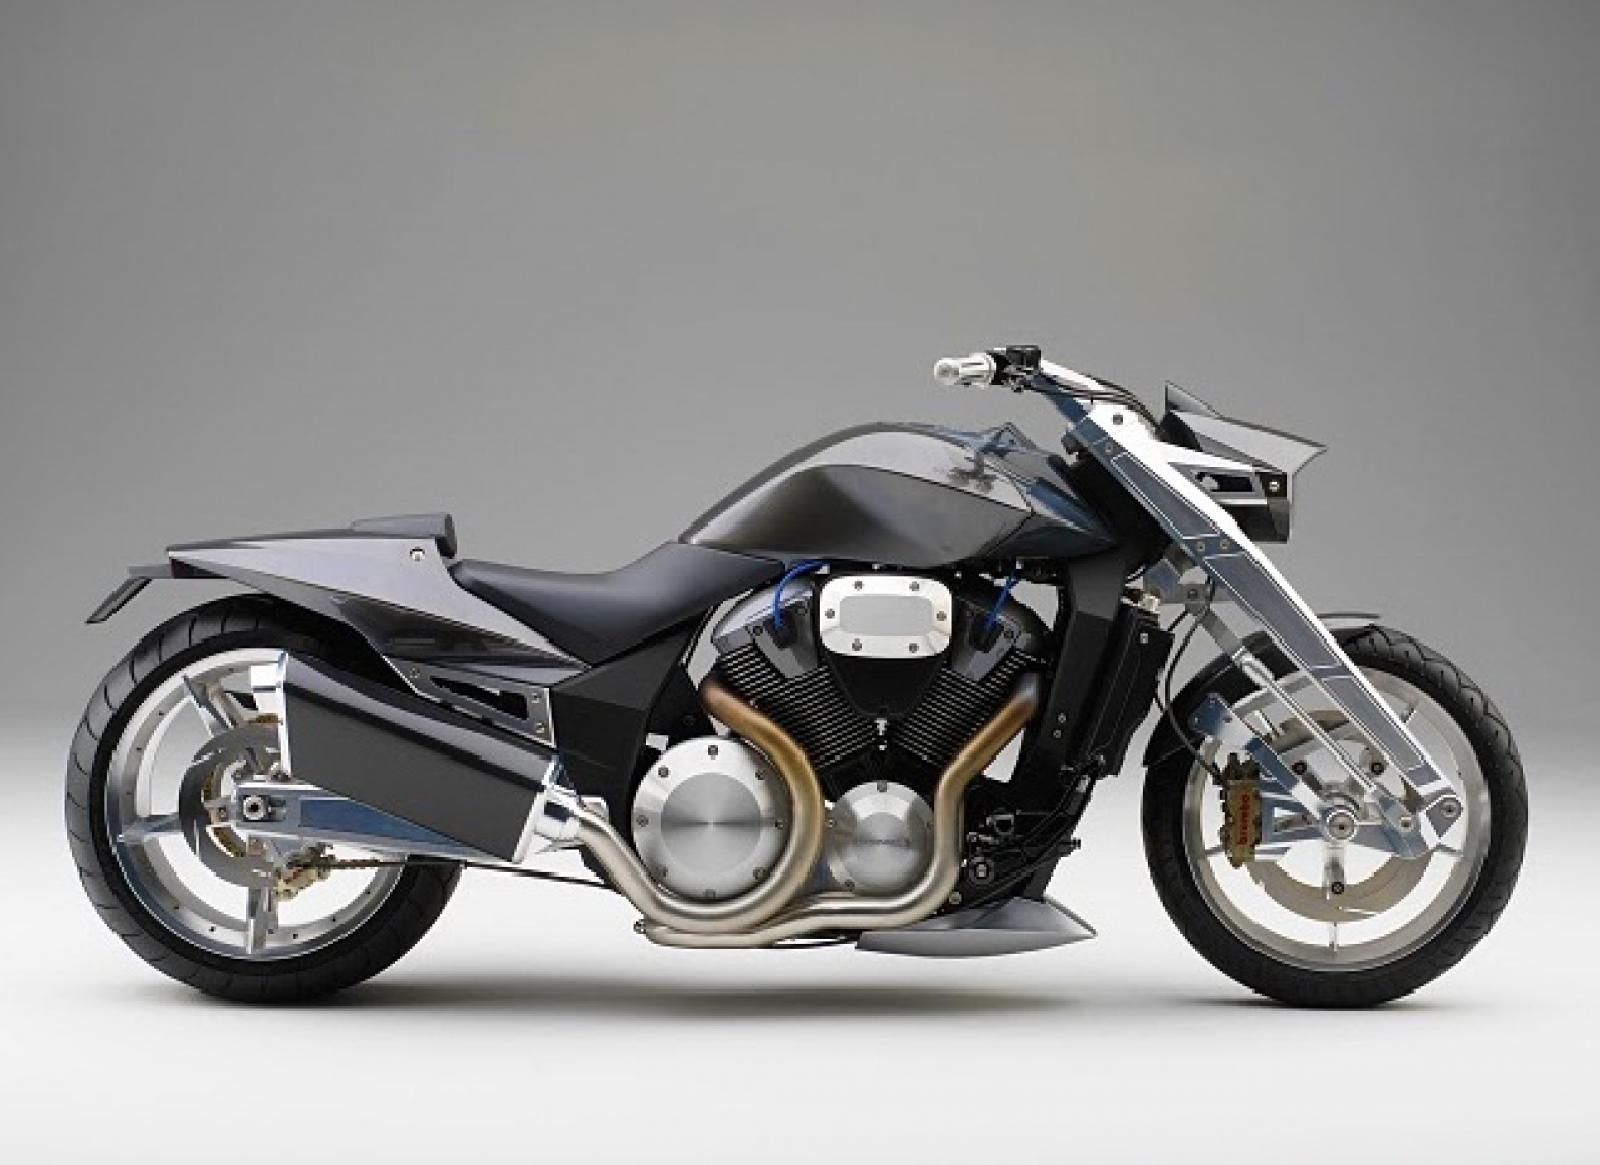 Автомобили байк модельный. Концепт Honda VTX. Honda байк. Мотоцикл Аурус. Тяжелые мотоциклы Honda.